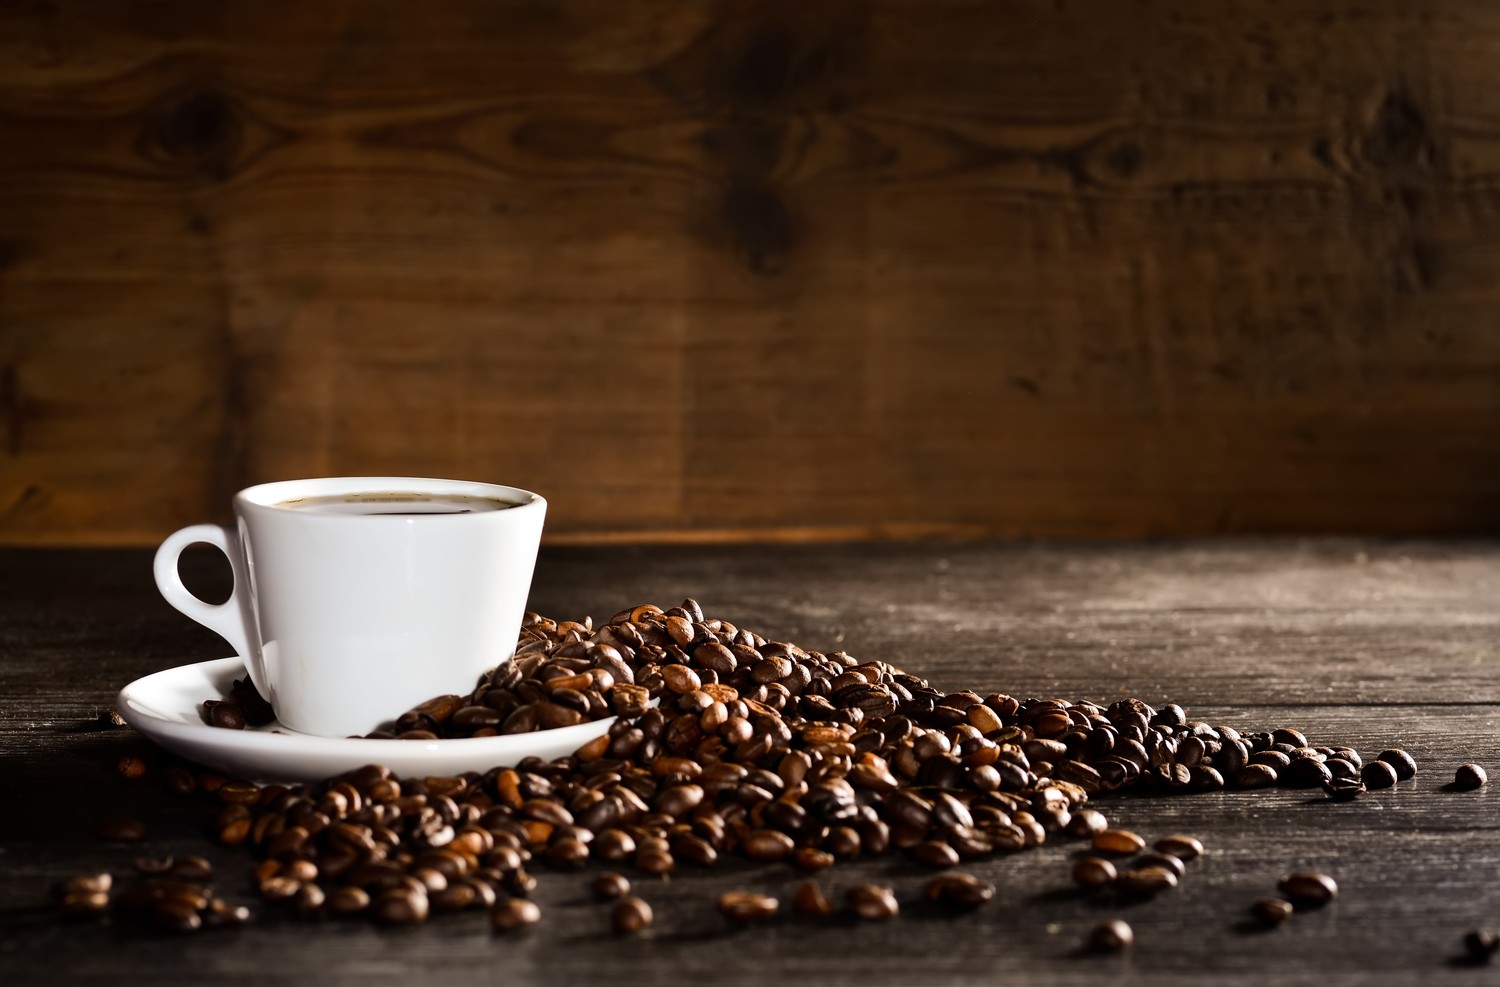 Coffee - Regular - Small - Serves 10-12